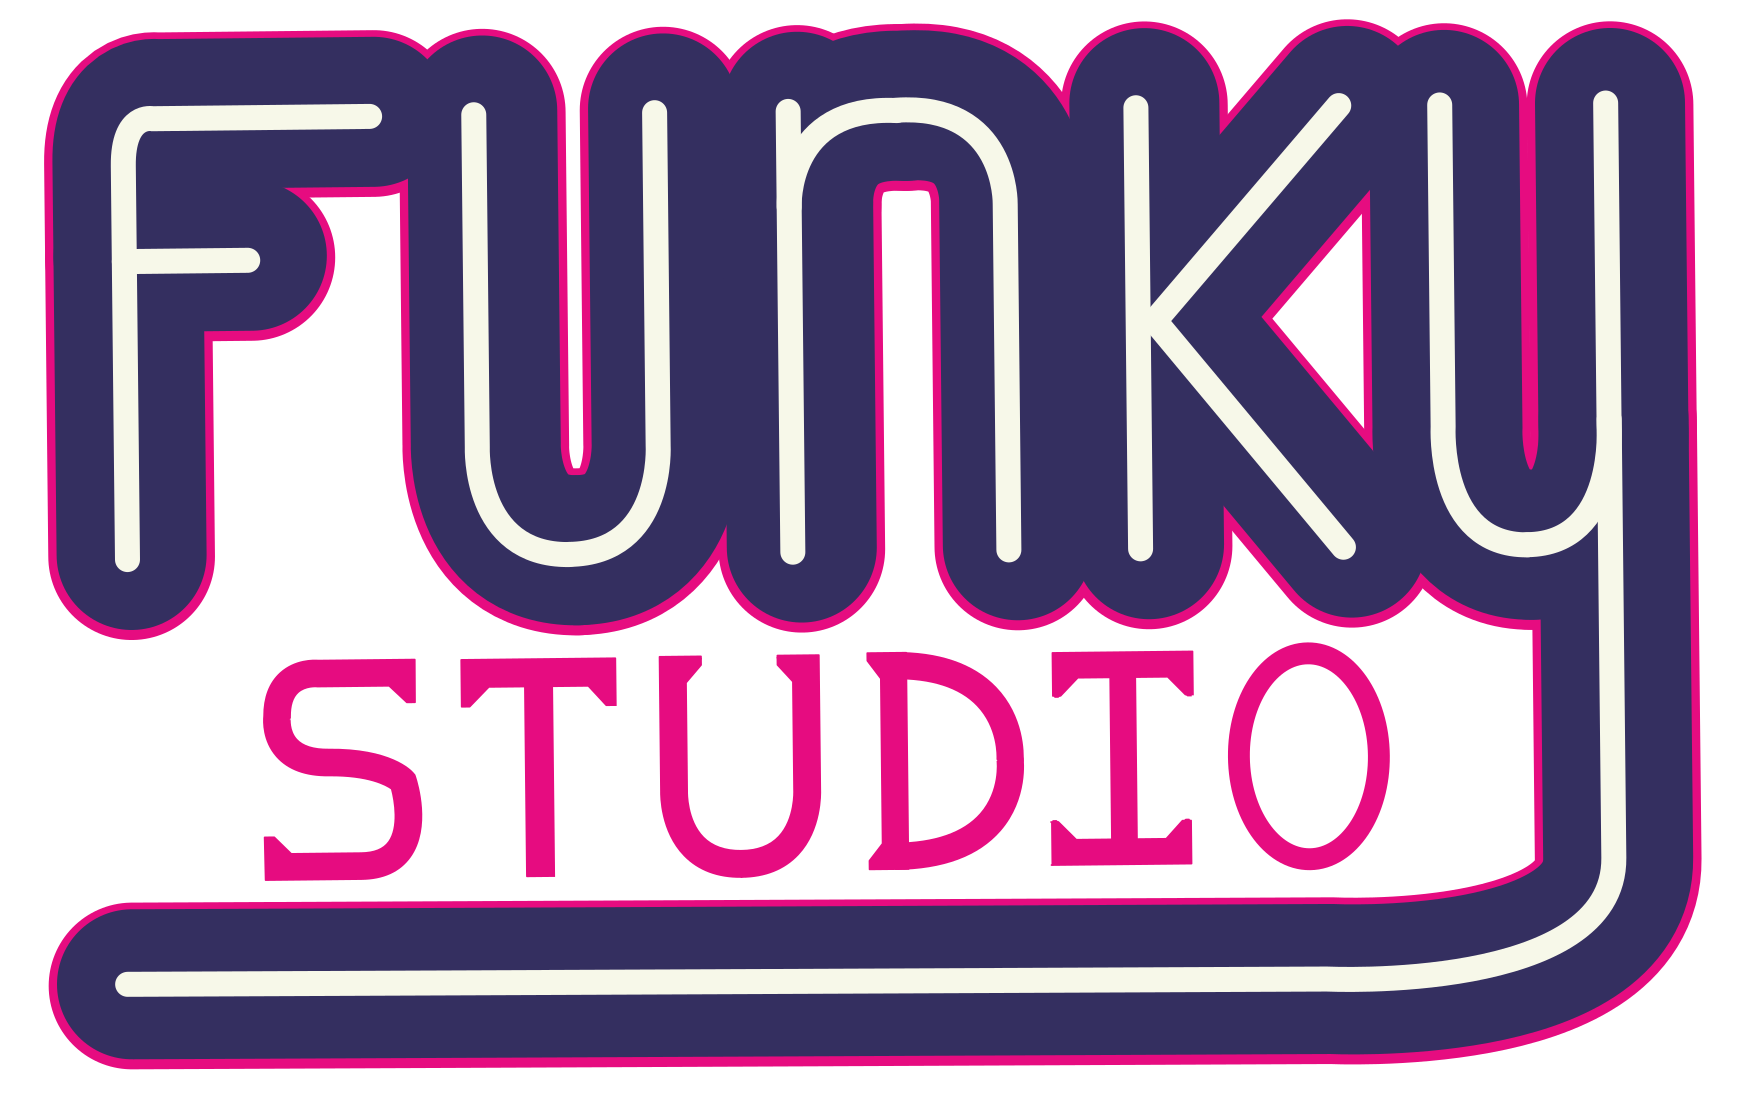 workshop | tufting | tufting gun | tuften | tuftgun | Funky Studio | Shrinky dink | krimpplastic | uv resin